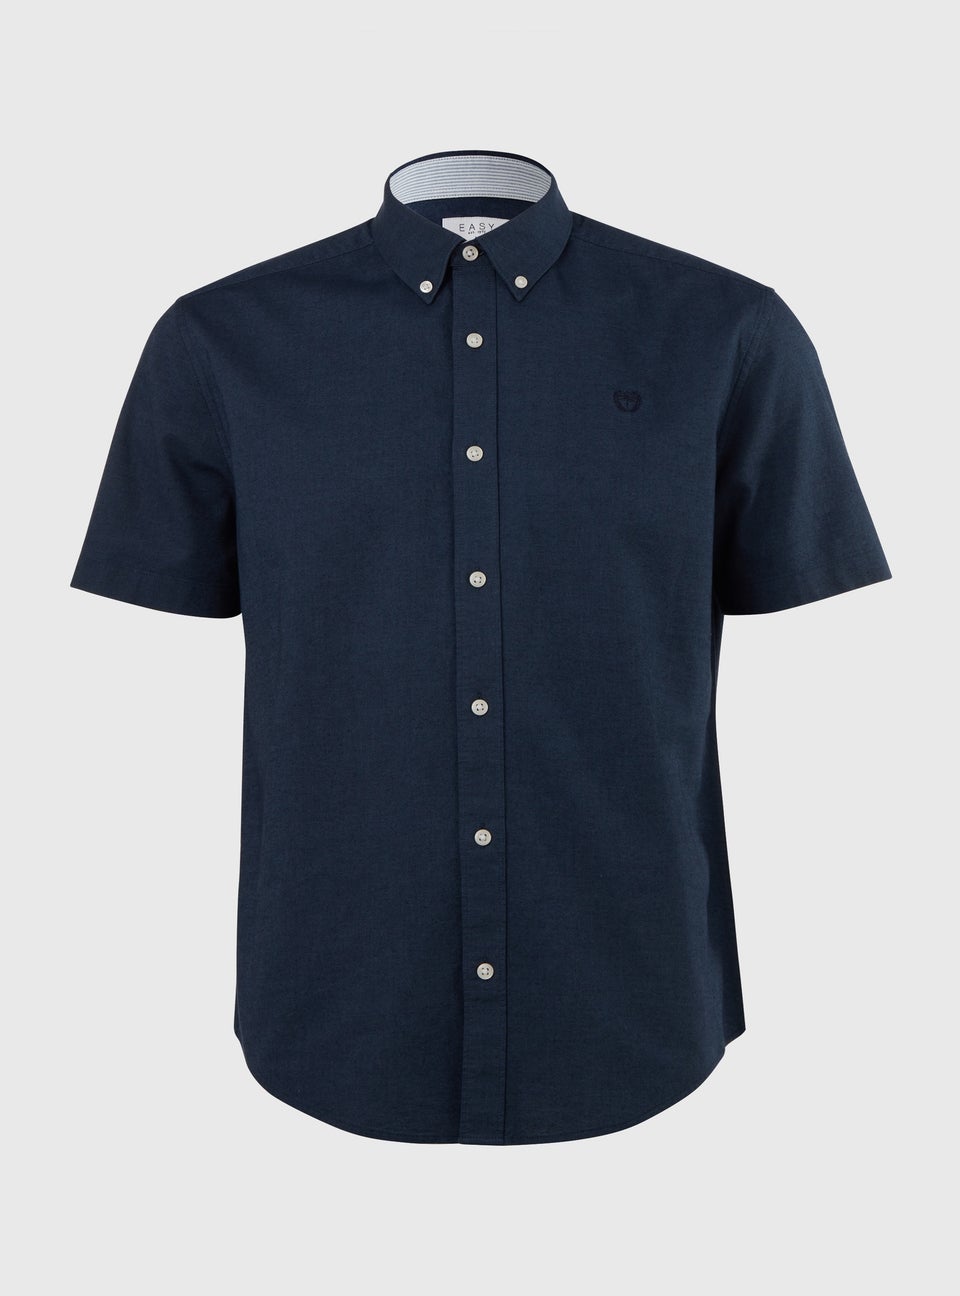 Navy Cross Dye Oxford Short Sleeve Shirt